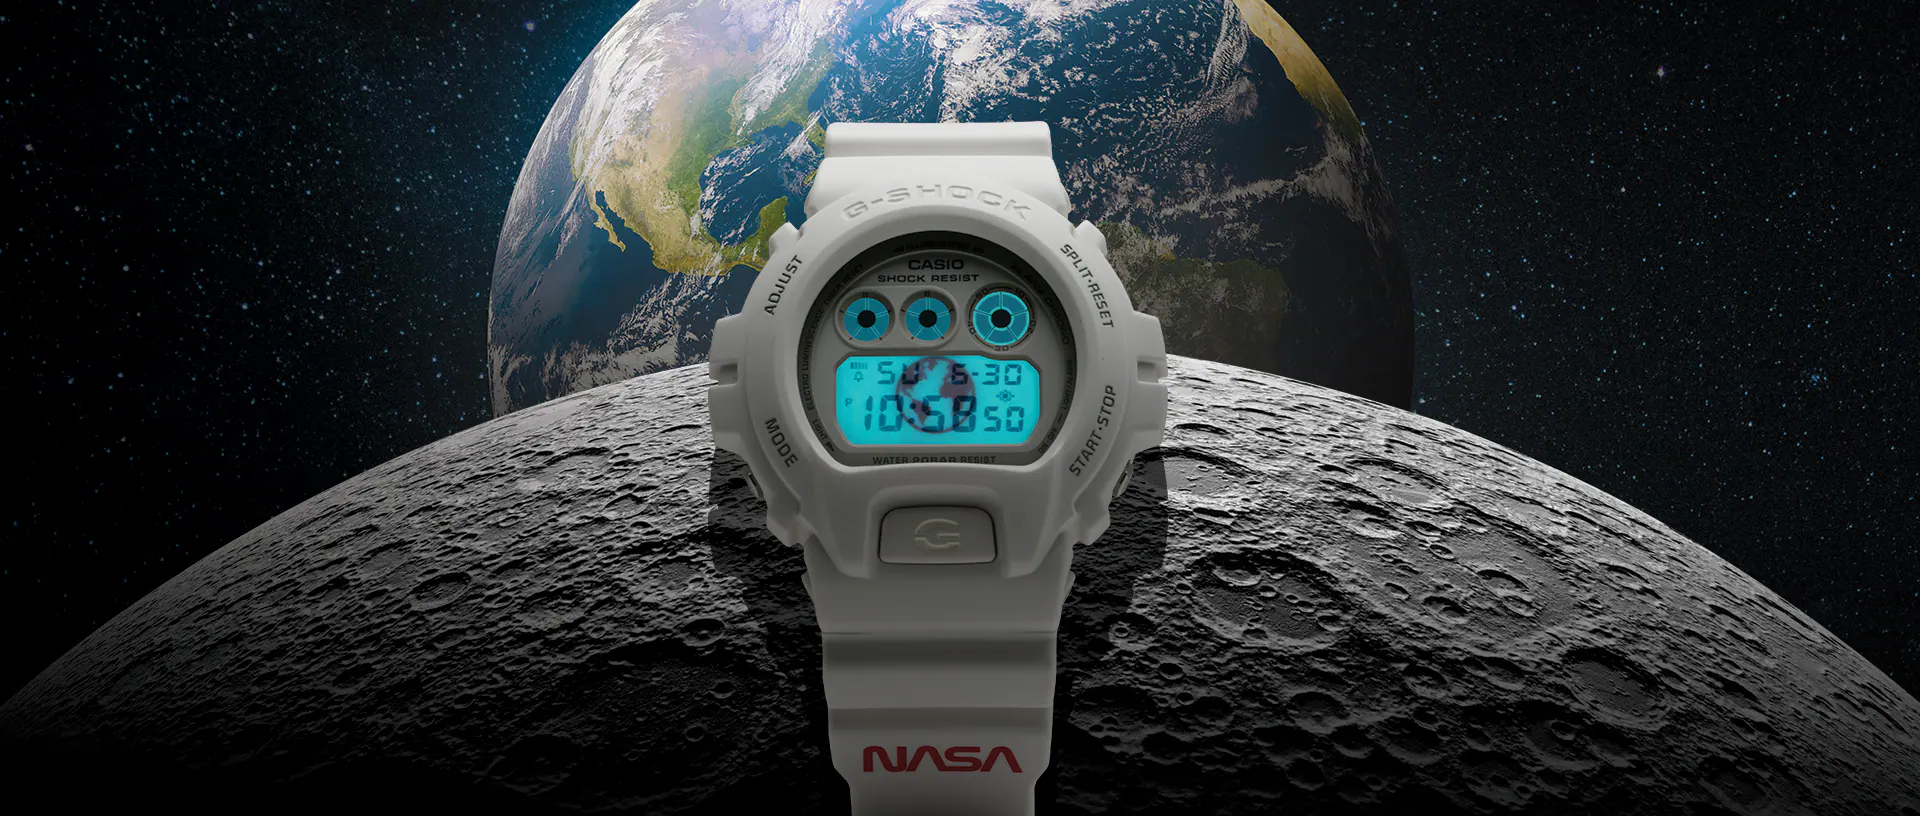 G-Shock NASA Limited Edition DW6900